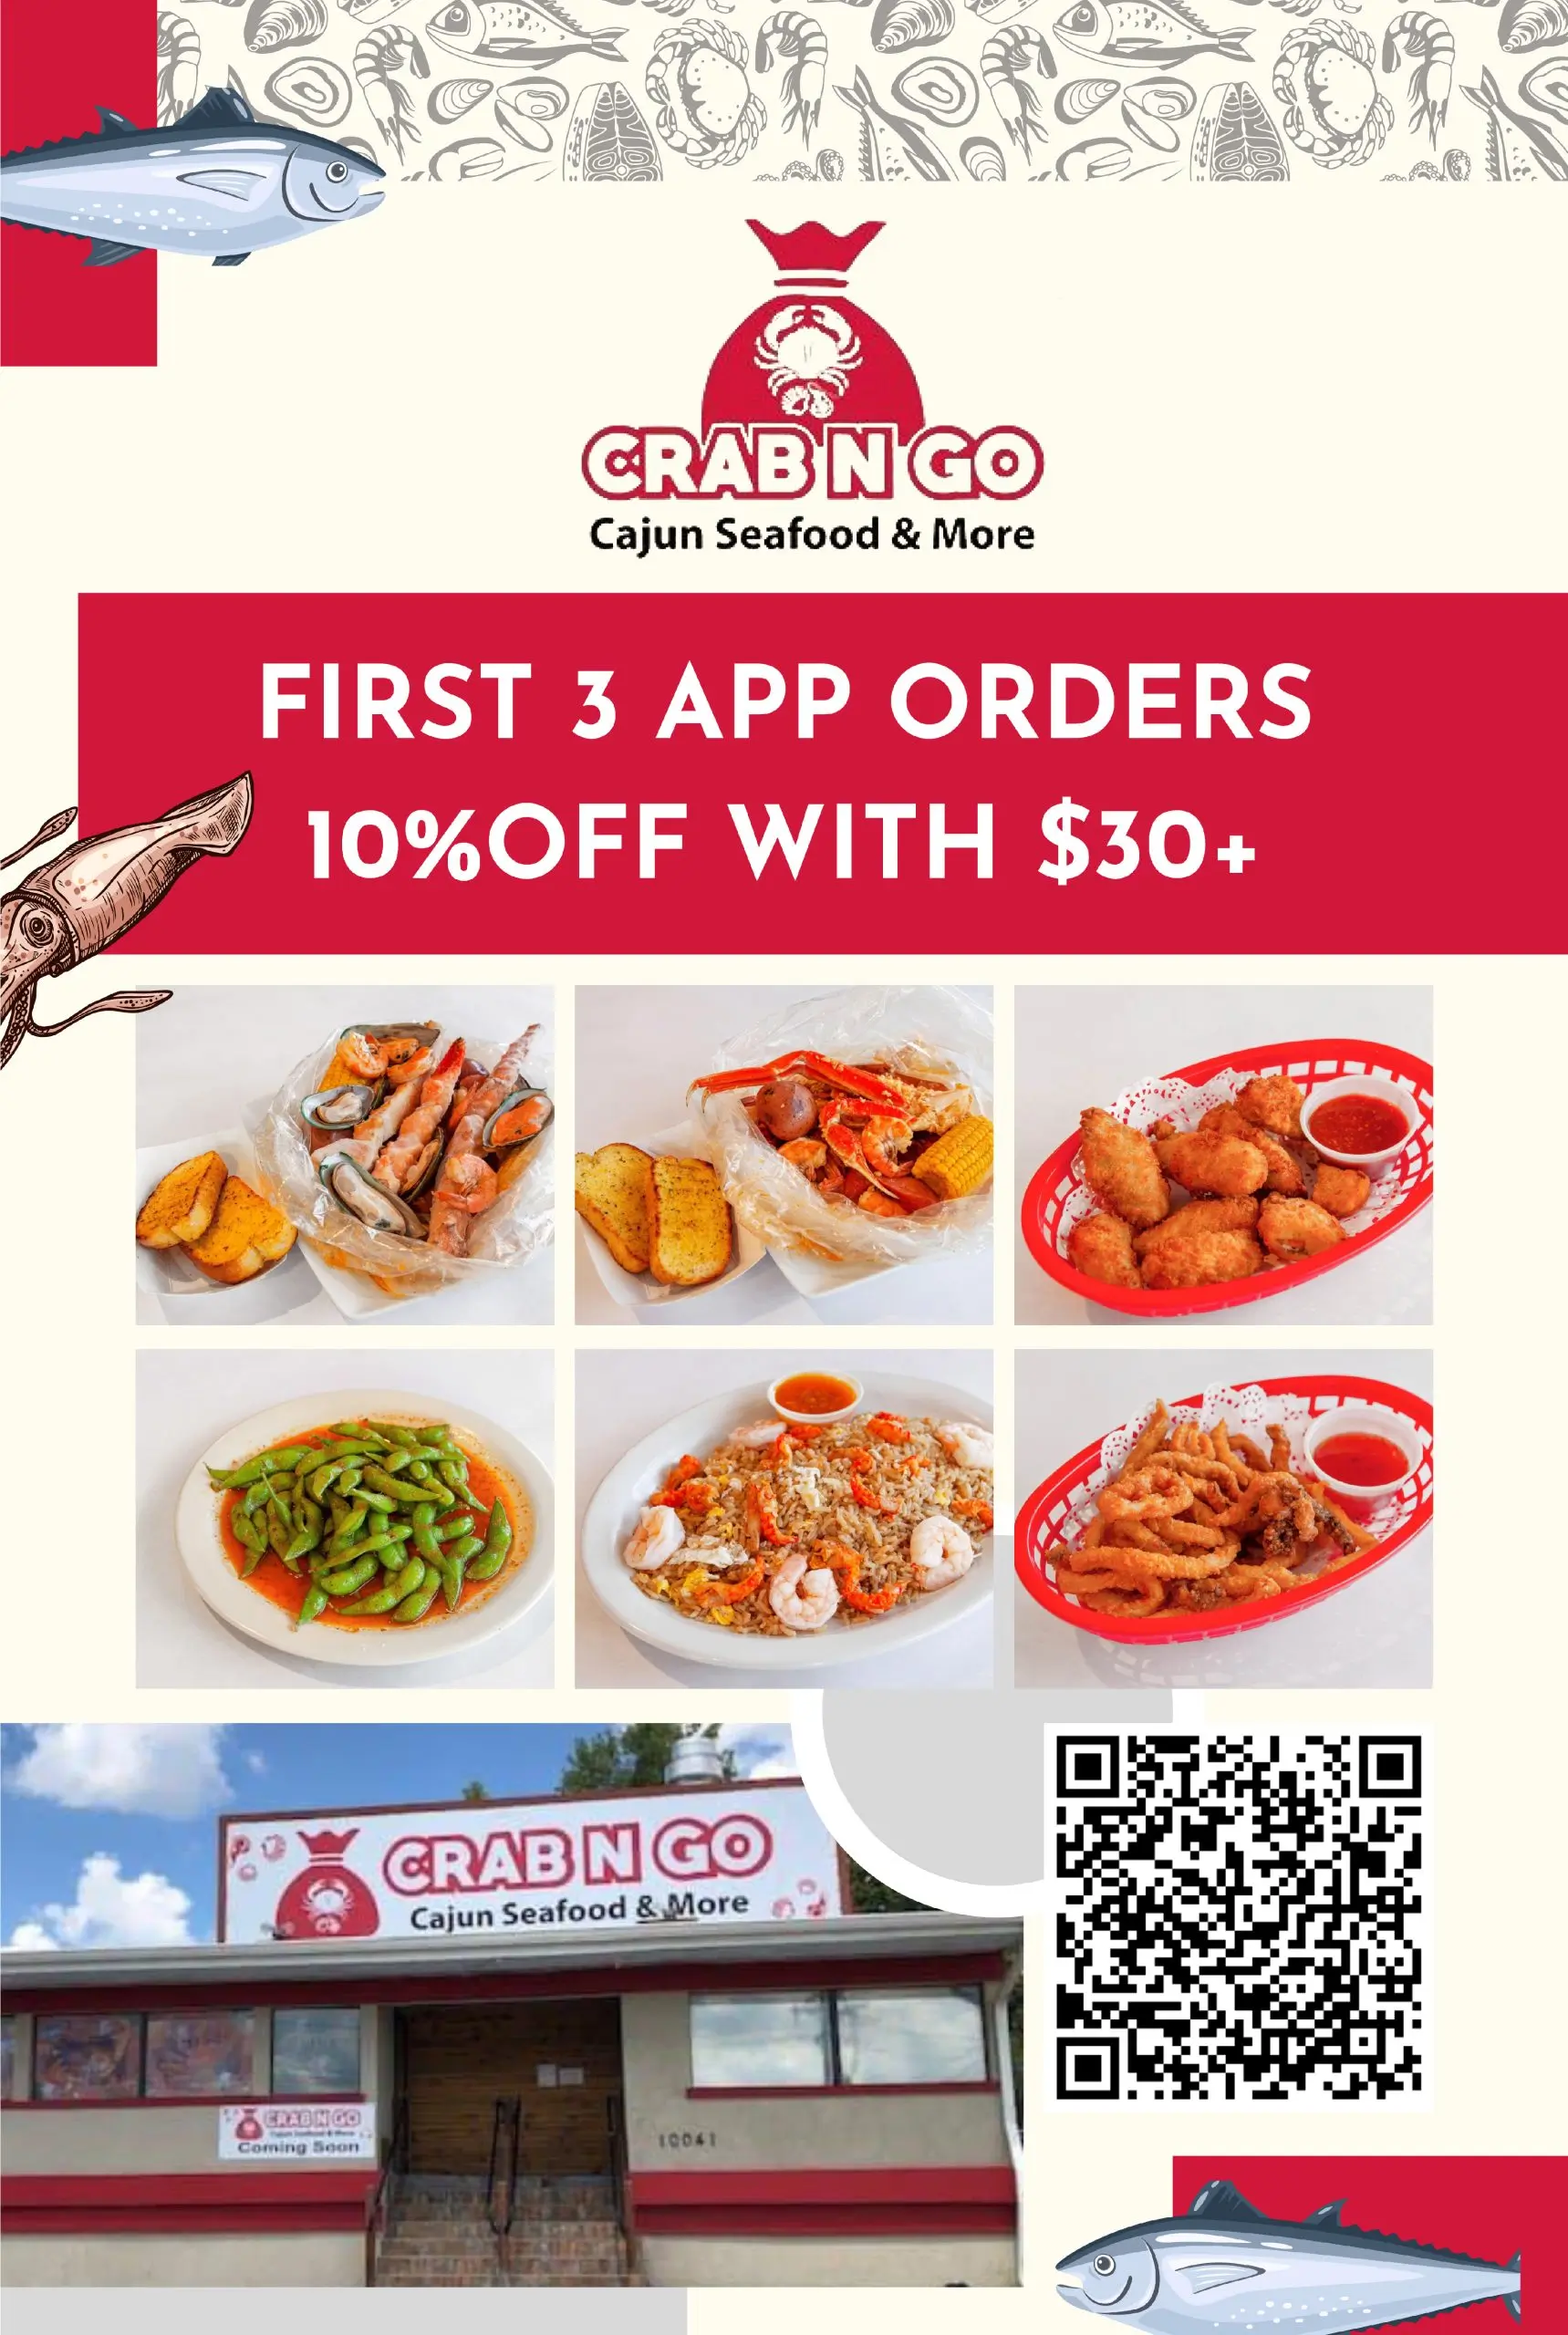 Crab N Go - Cajun Seafood & More, Online Order, St. Louis